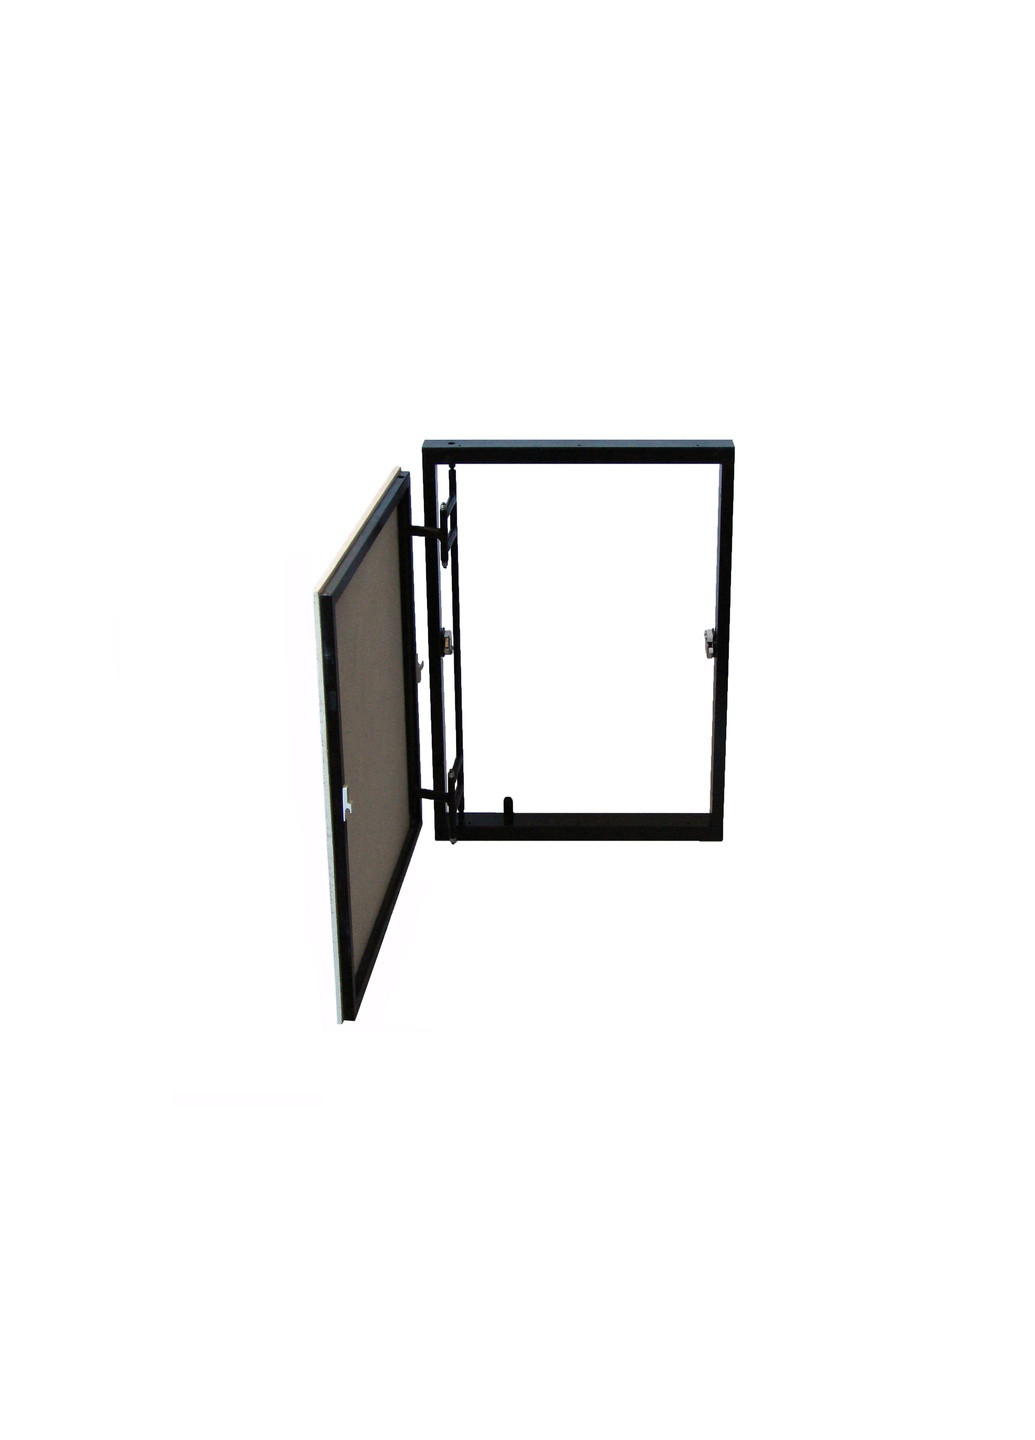 Ревизионный люк скрытого монтажа под плитку нажимного типа 400x600 ревизионная дверца для плитки (1138) S-Dom (264208773)